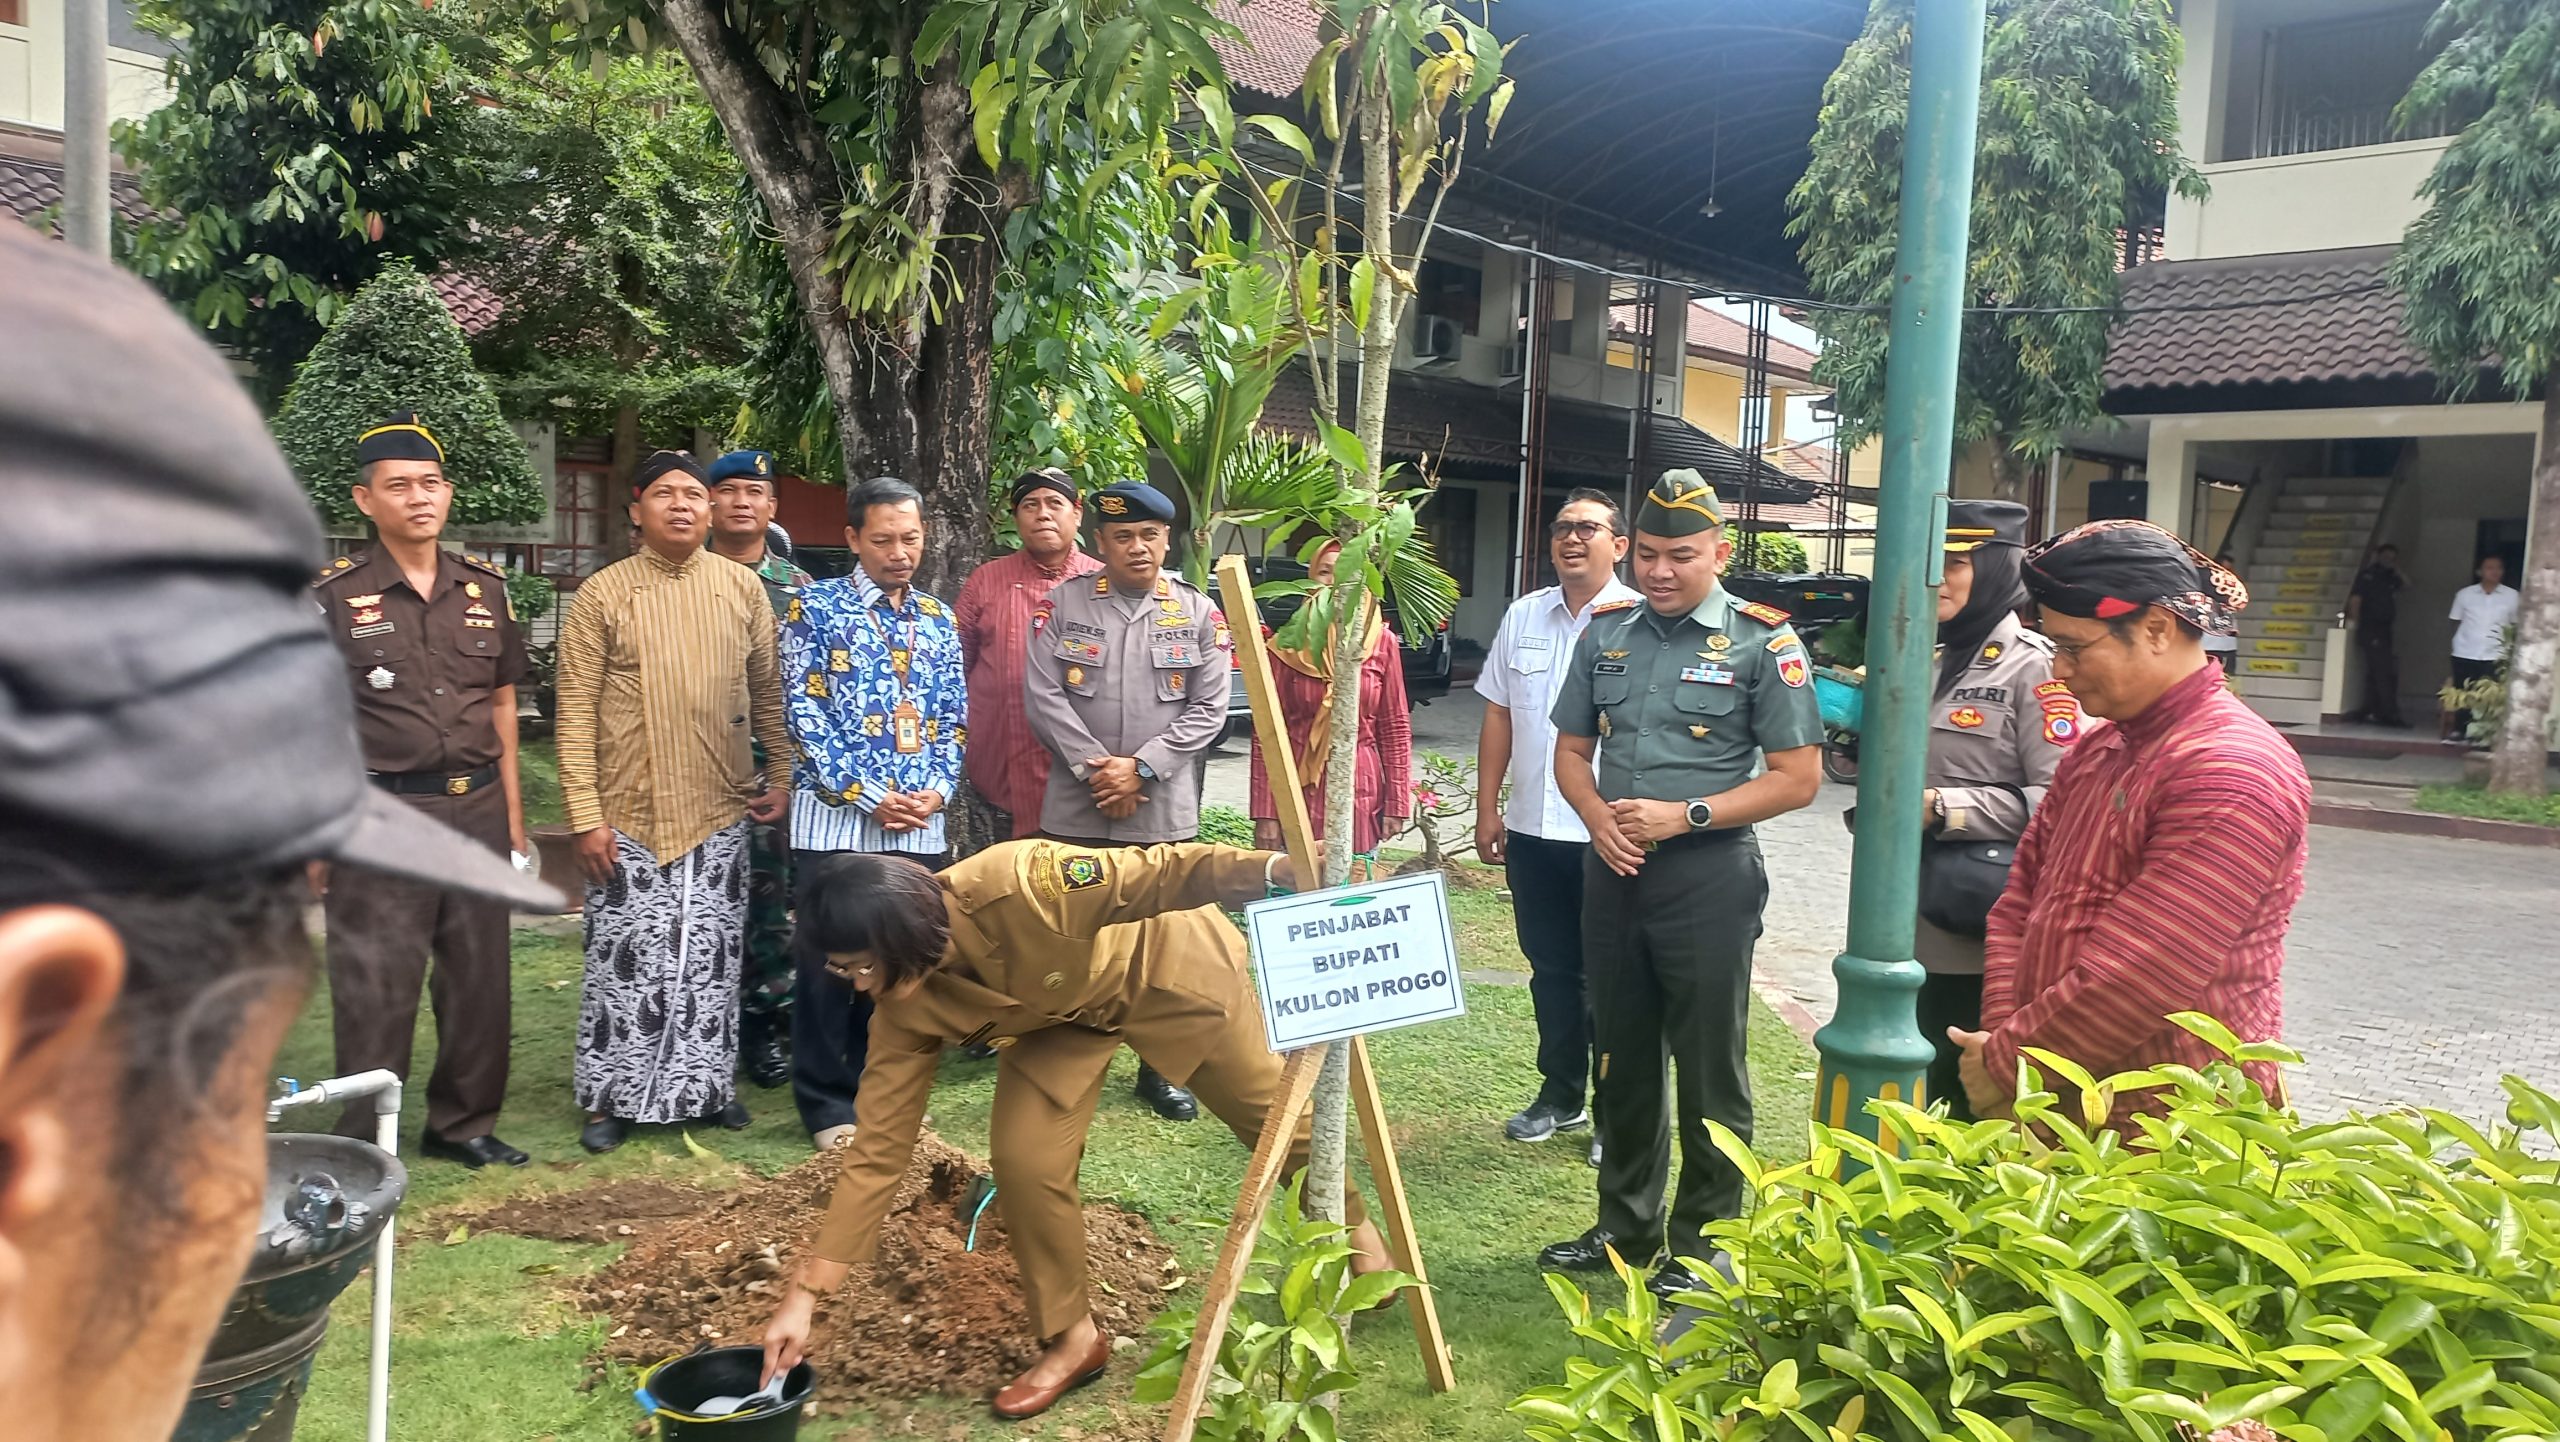 Terima Adipura Setelah 30 Tahun, Pj Bupati Kulon Progo :Berkat Partisipasi Masyarakat